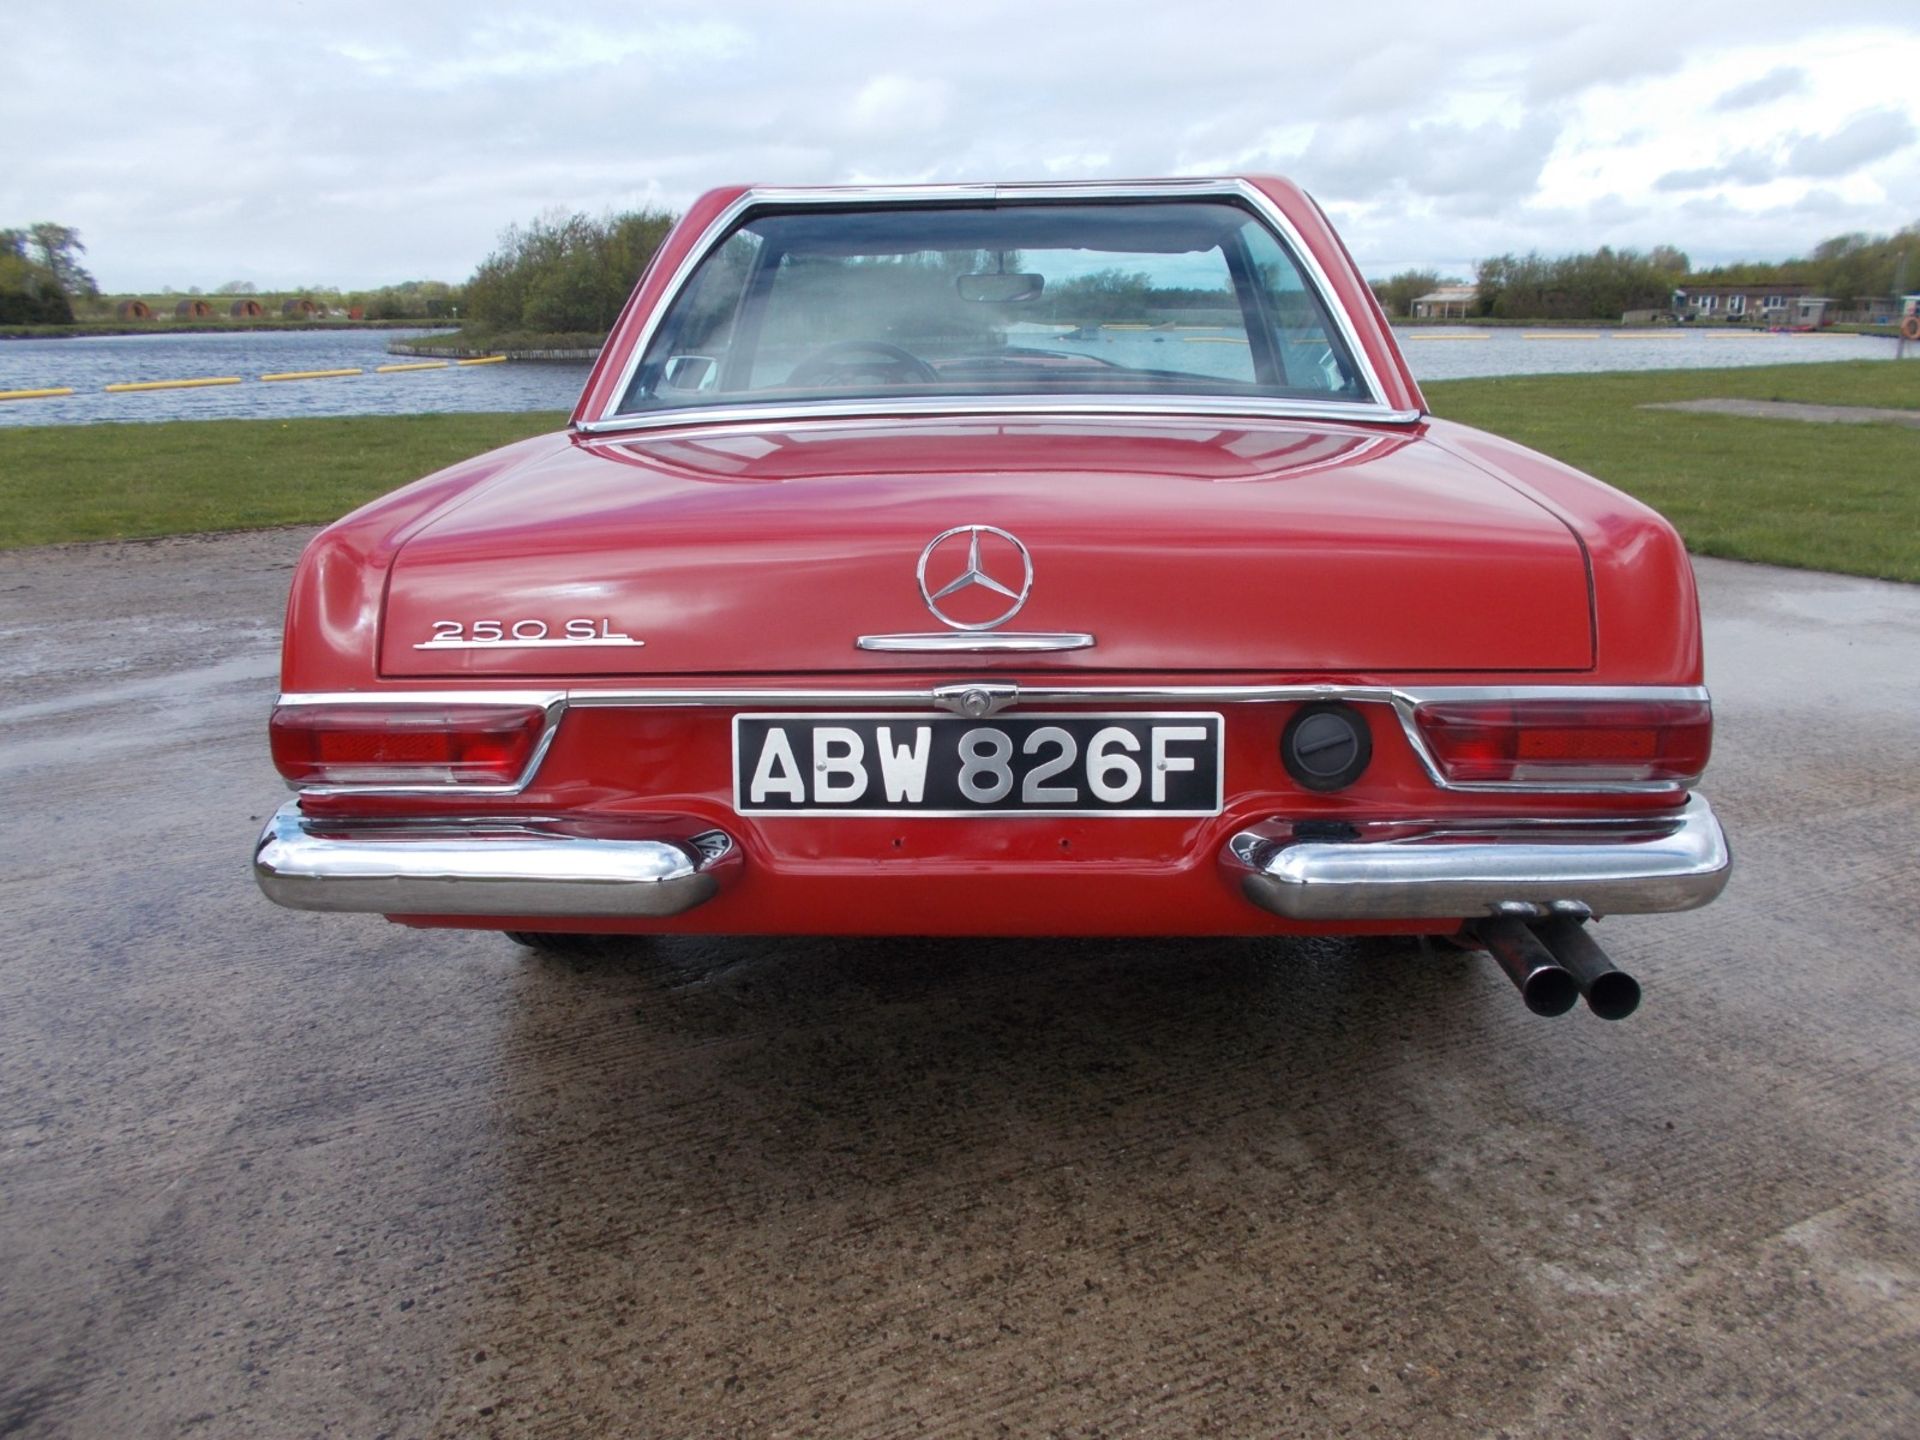 1968 (F) MERCEDES 250SL R107,2.5 LITRE PETROL AUTOMATIC, LEFT HAND DRIVE, FULLY UK REGISTERED*NO VAT - Image 8 of 38